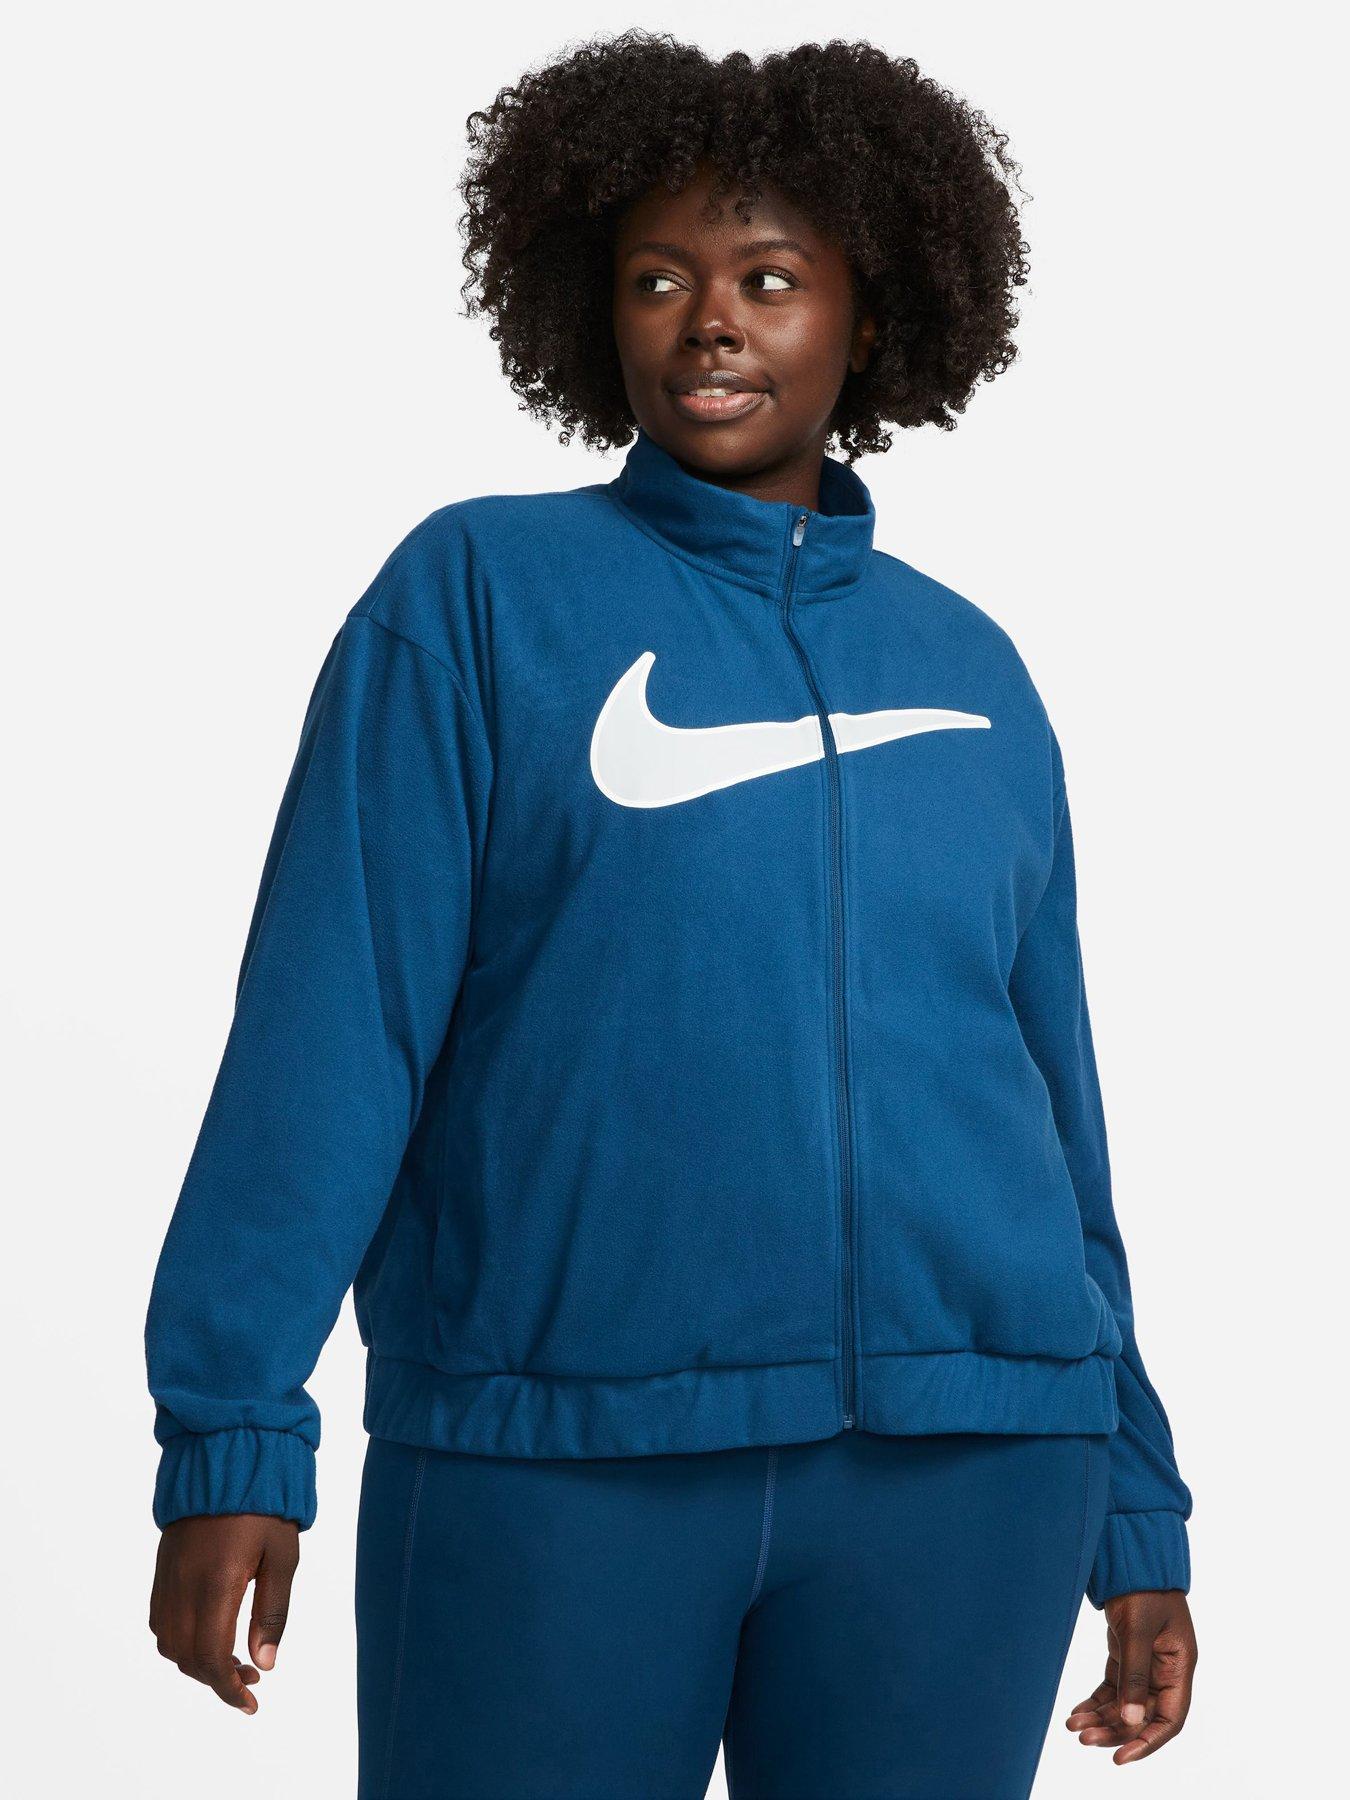 Women's Nike Jackets & Coats Very.co.uk